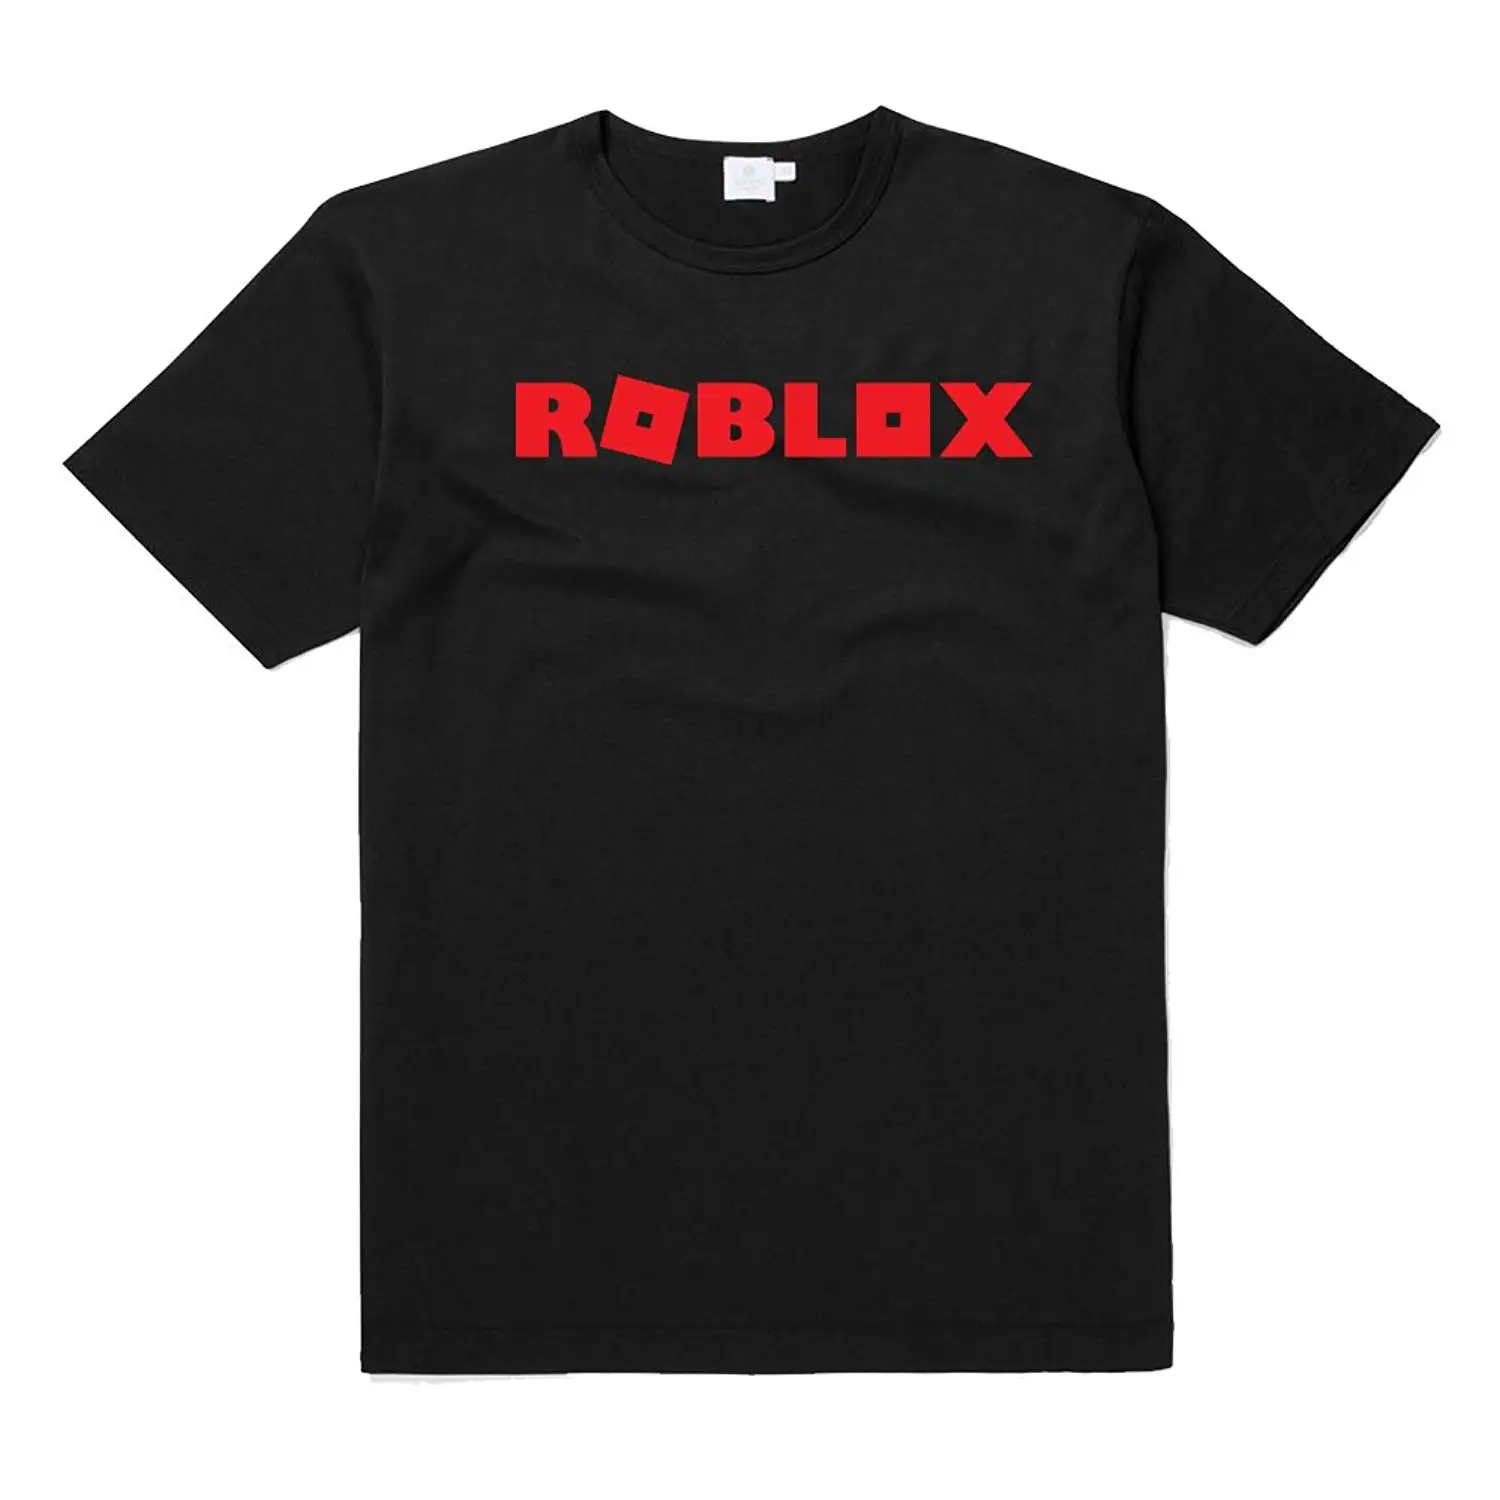 Cheap Roblox Battlefield Hacks Find Roblox Battlefield Hacks Deals On Line At Alibaba Com - red oa shirt roblox